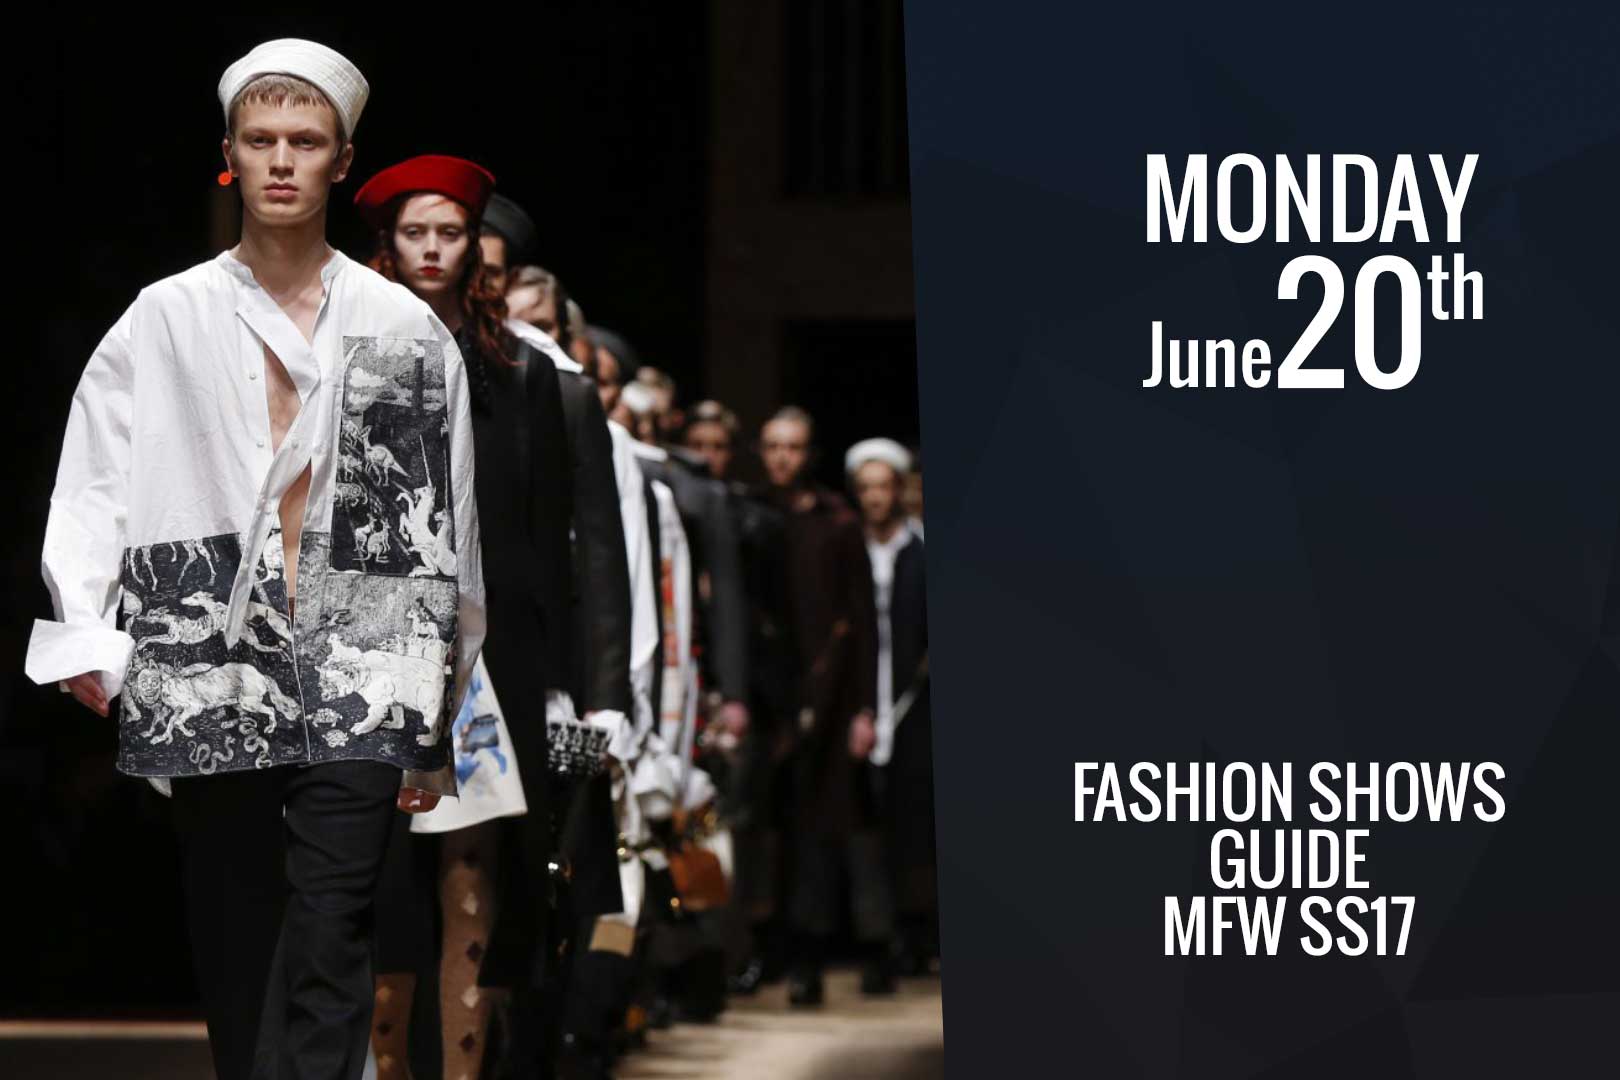 Monday June 20th: fashion shows guide